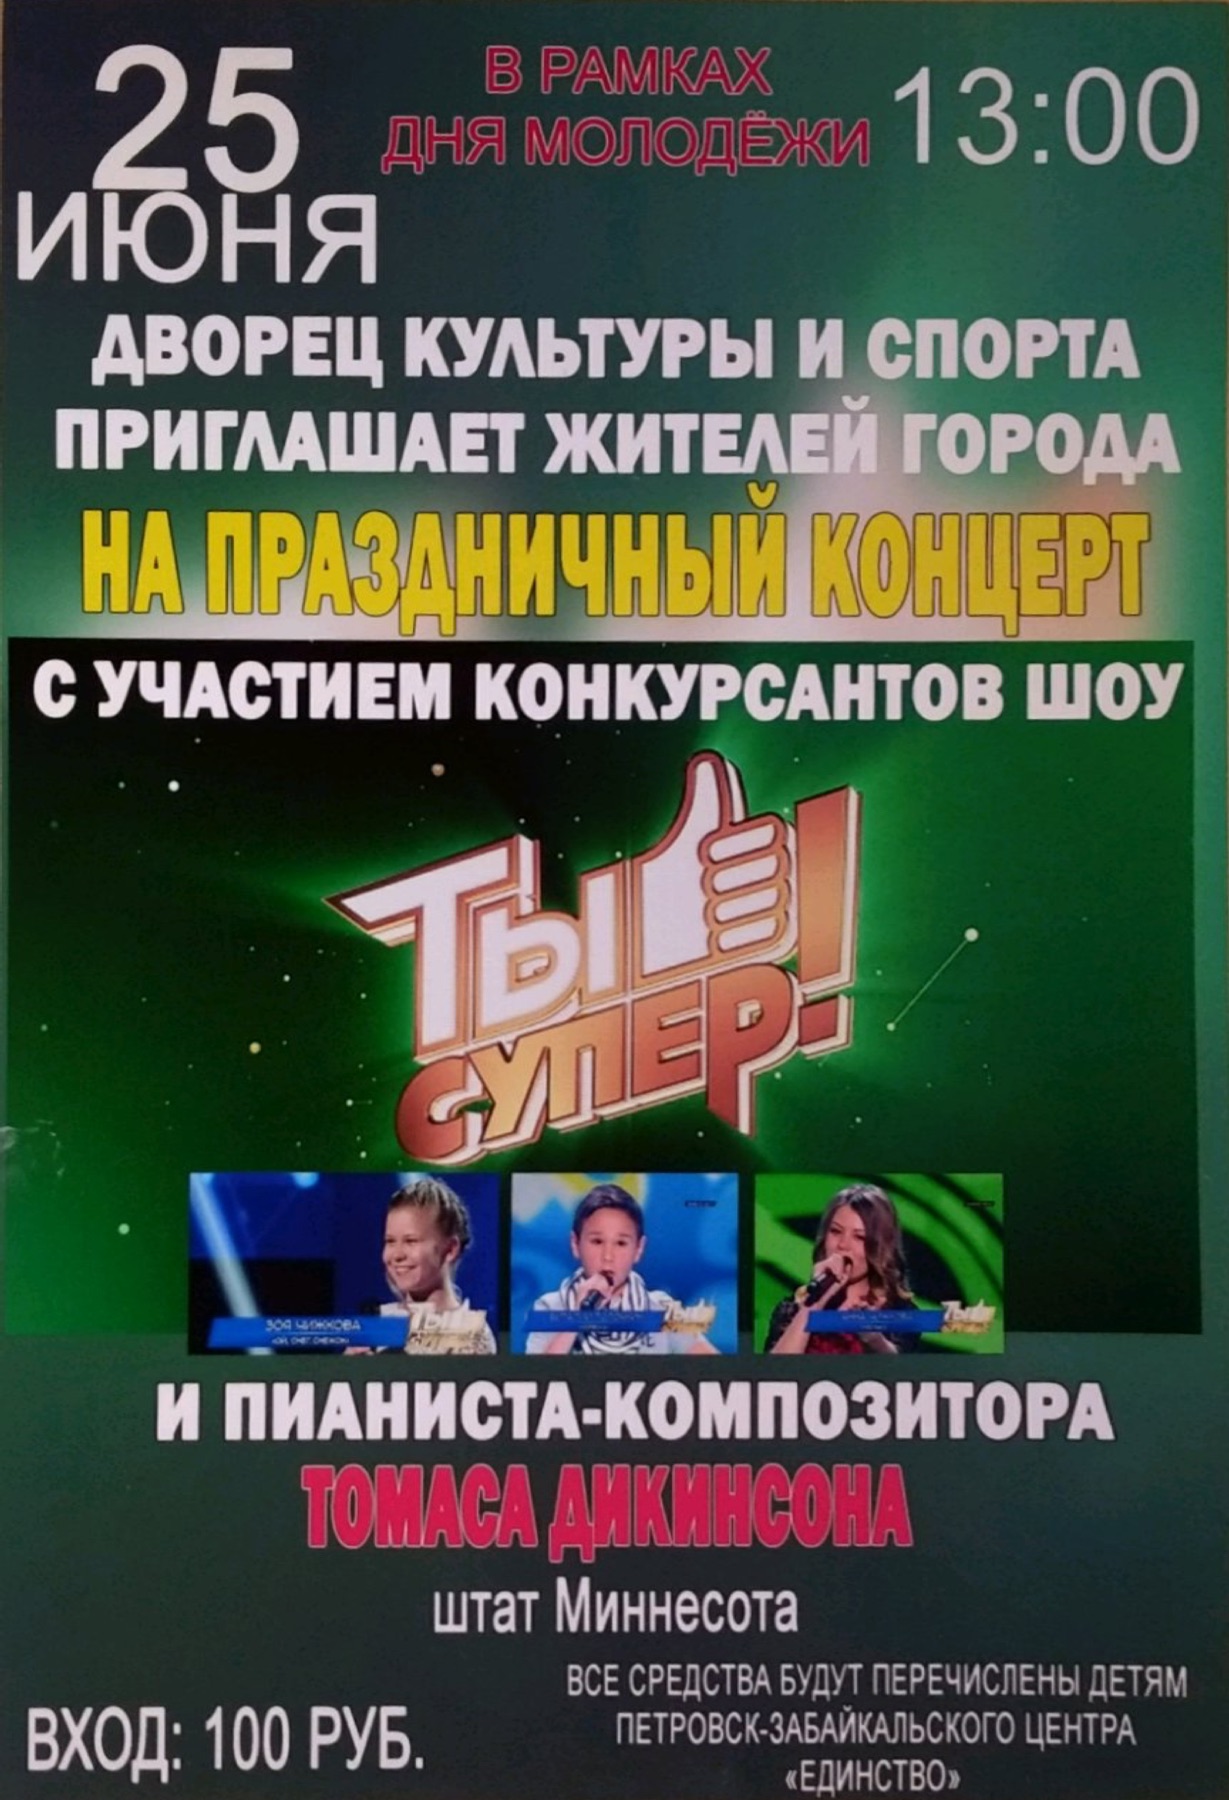 concert poster in Russian